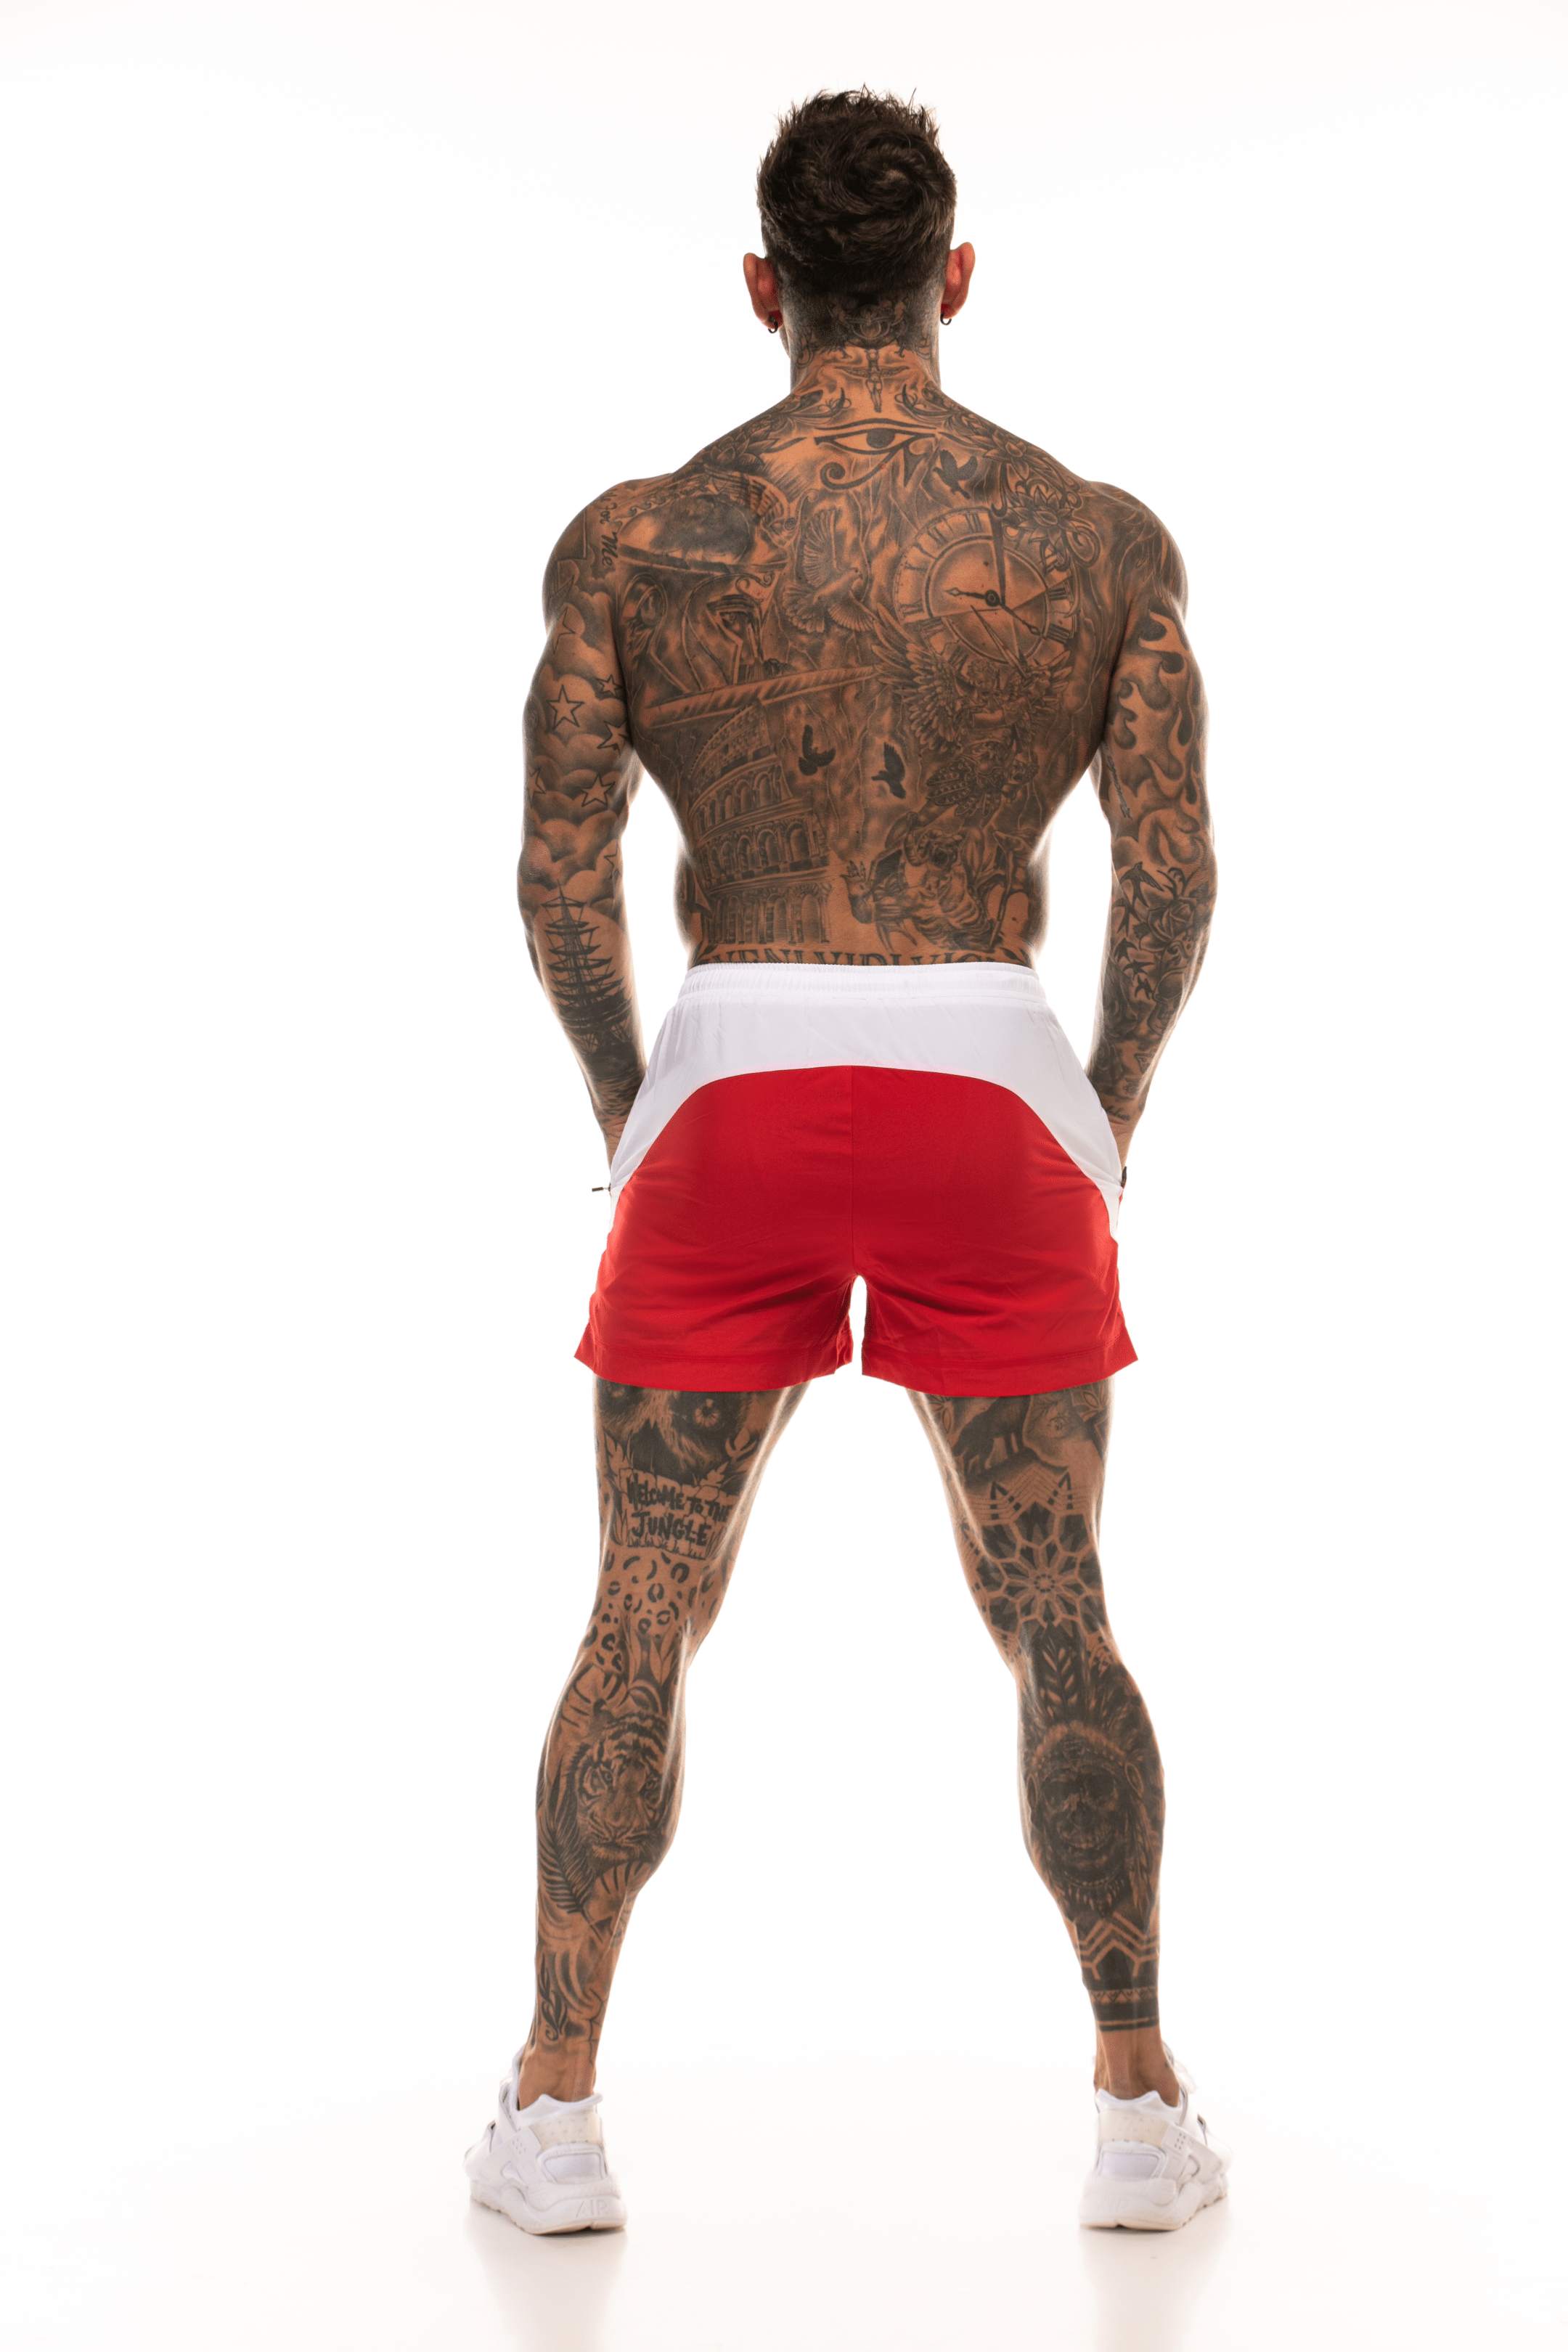 GymFreak Mens Pro Shorts - Red - 3.5 inch